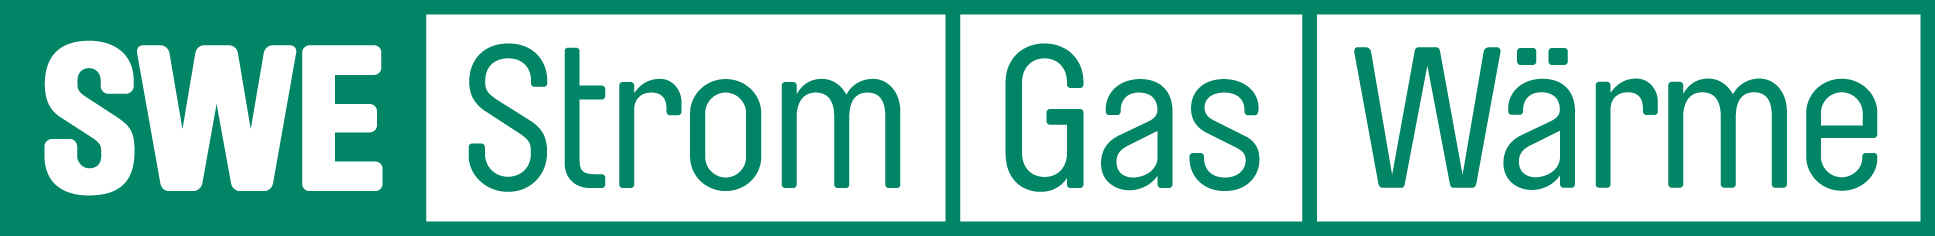 Grünes SWE Strom Gas Wärme Logo